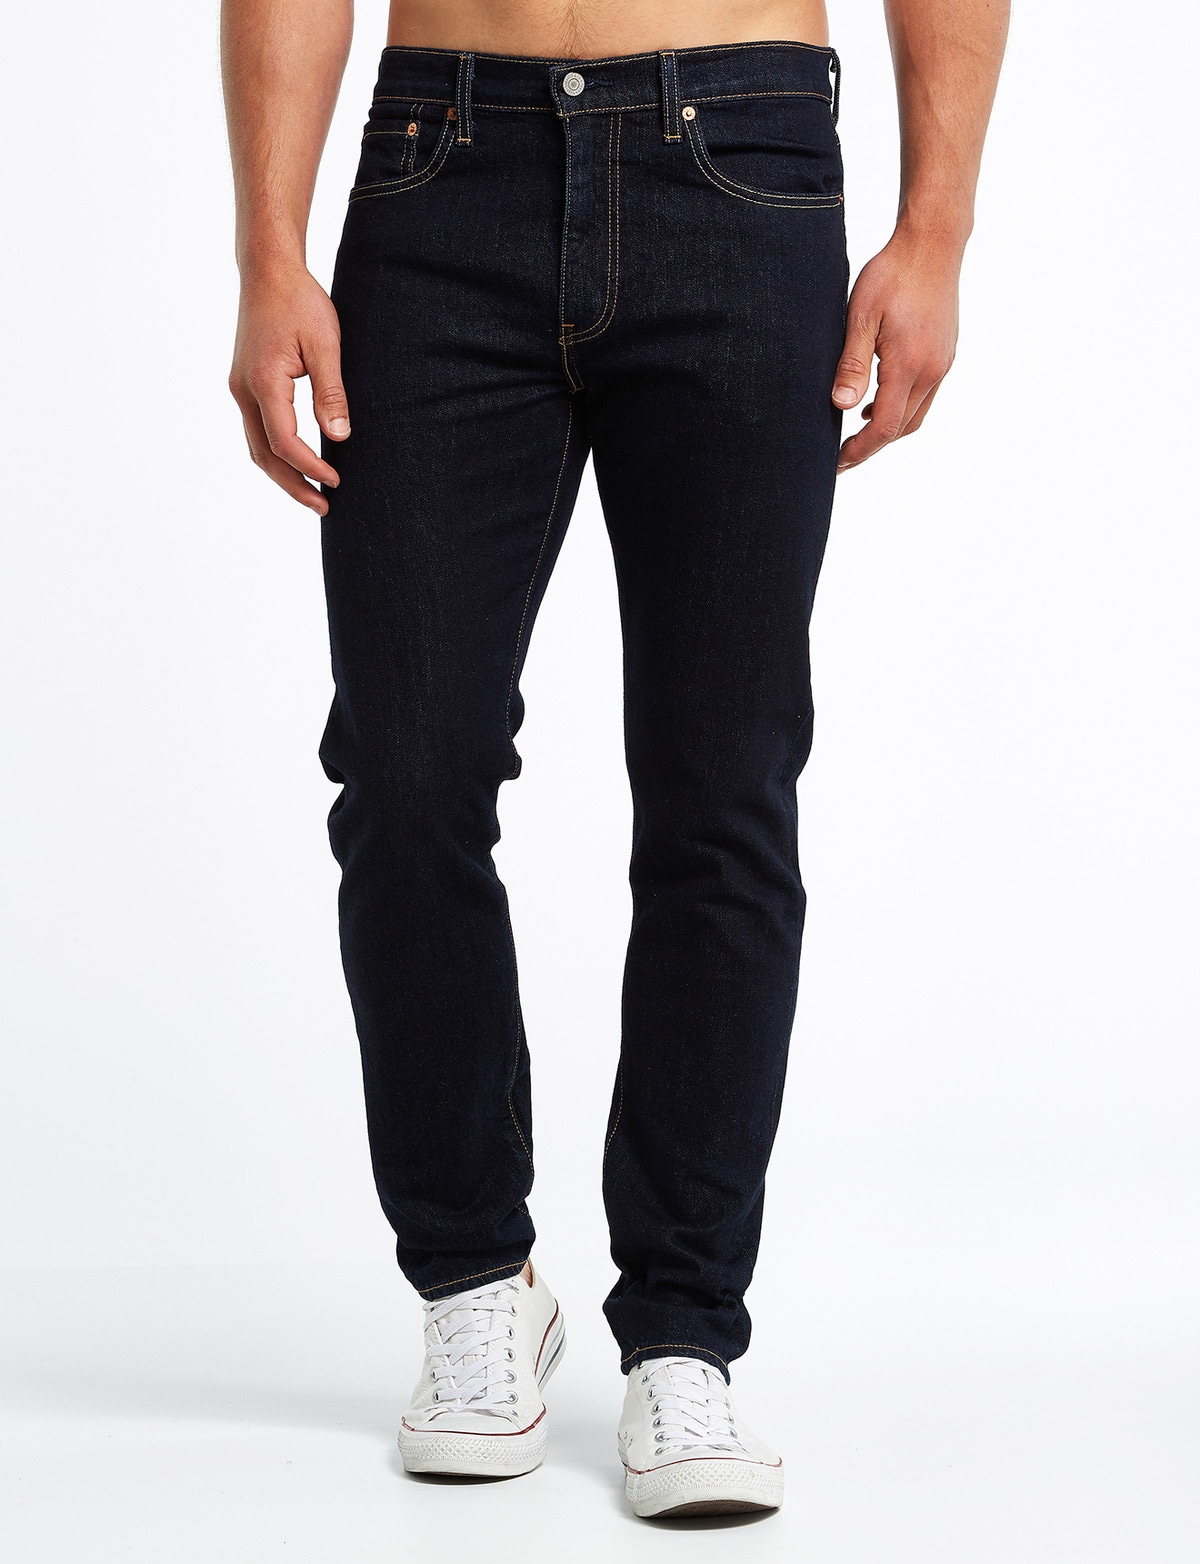 Levi's Men's 512 Slim Taper Fit Jeans - Dark Hollow